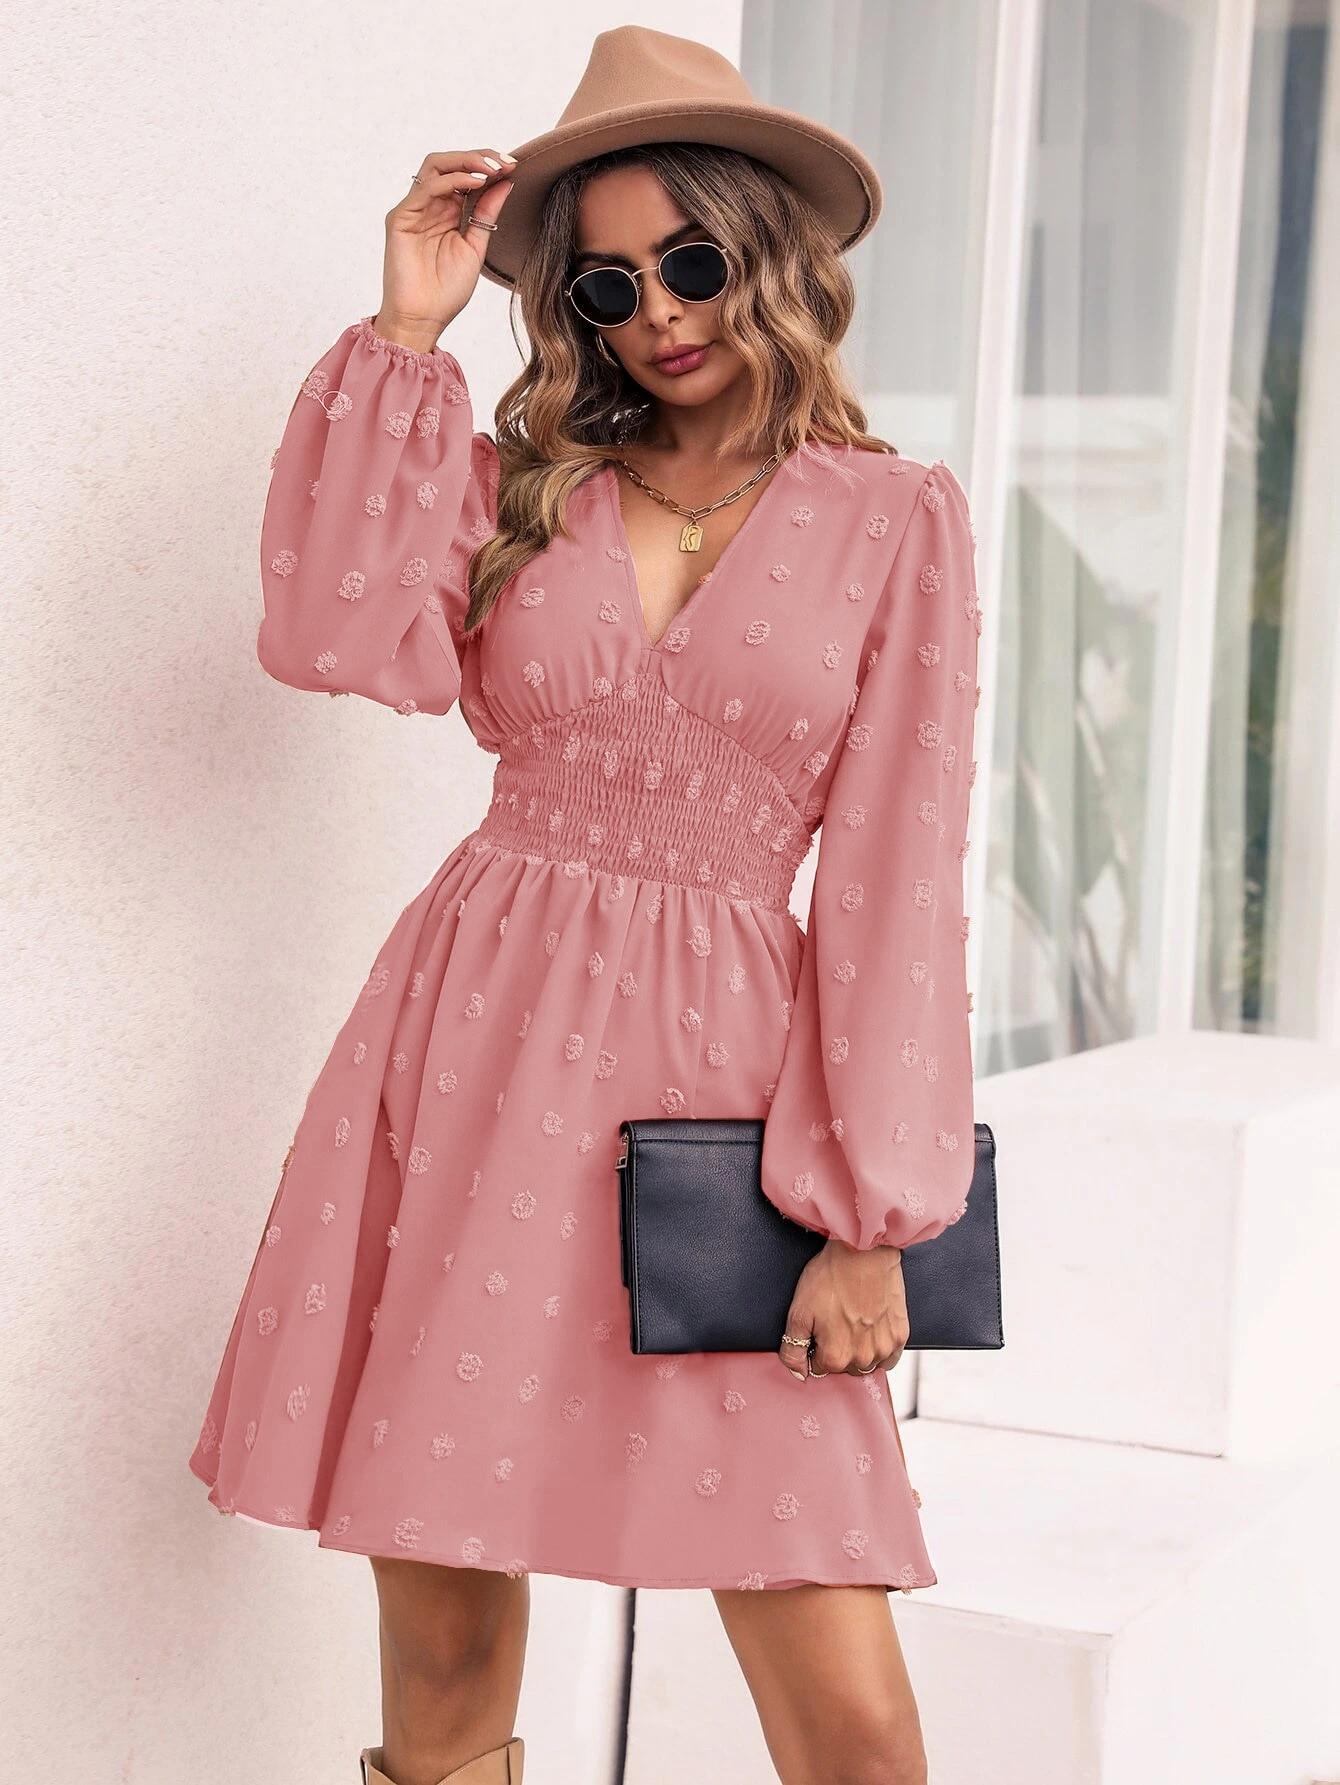 2022 Spring Elegant Chiffon Dress Women Casual Long Sleeve V Neck Dot Mini Dress Woman Fashion Holiday Black Pink Party Dresses